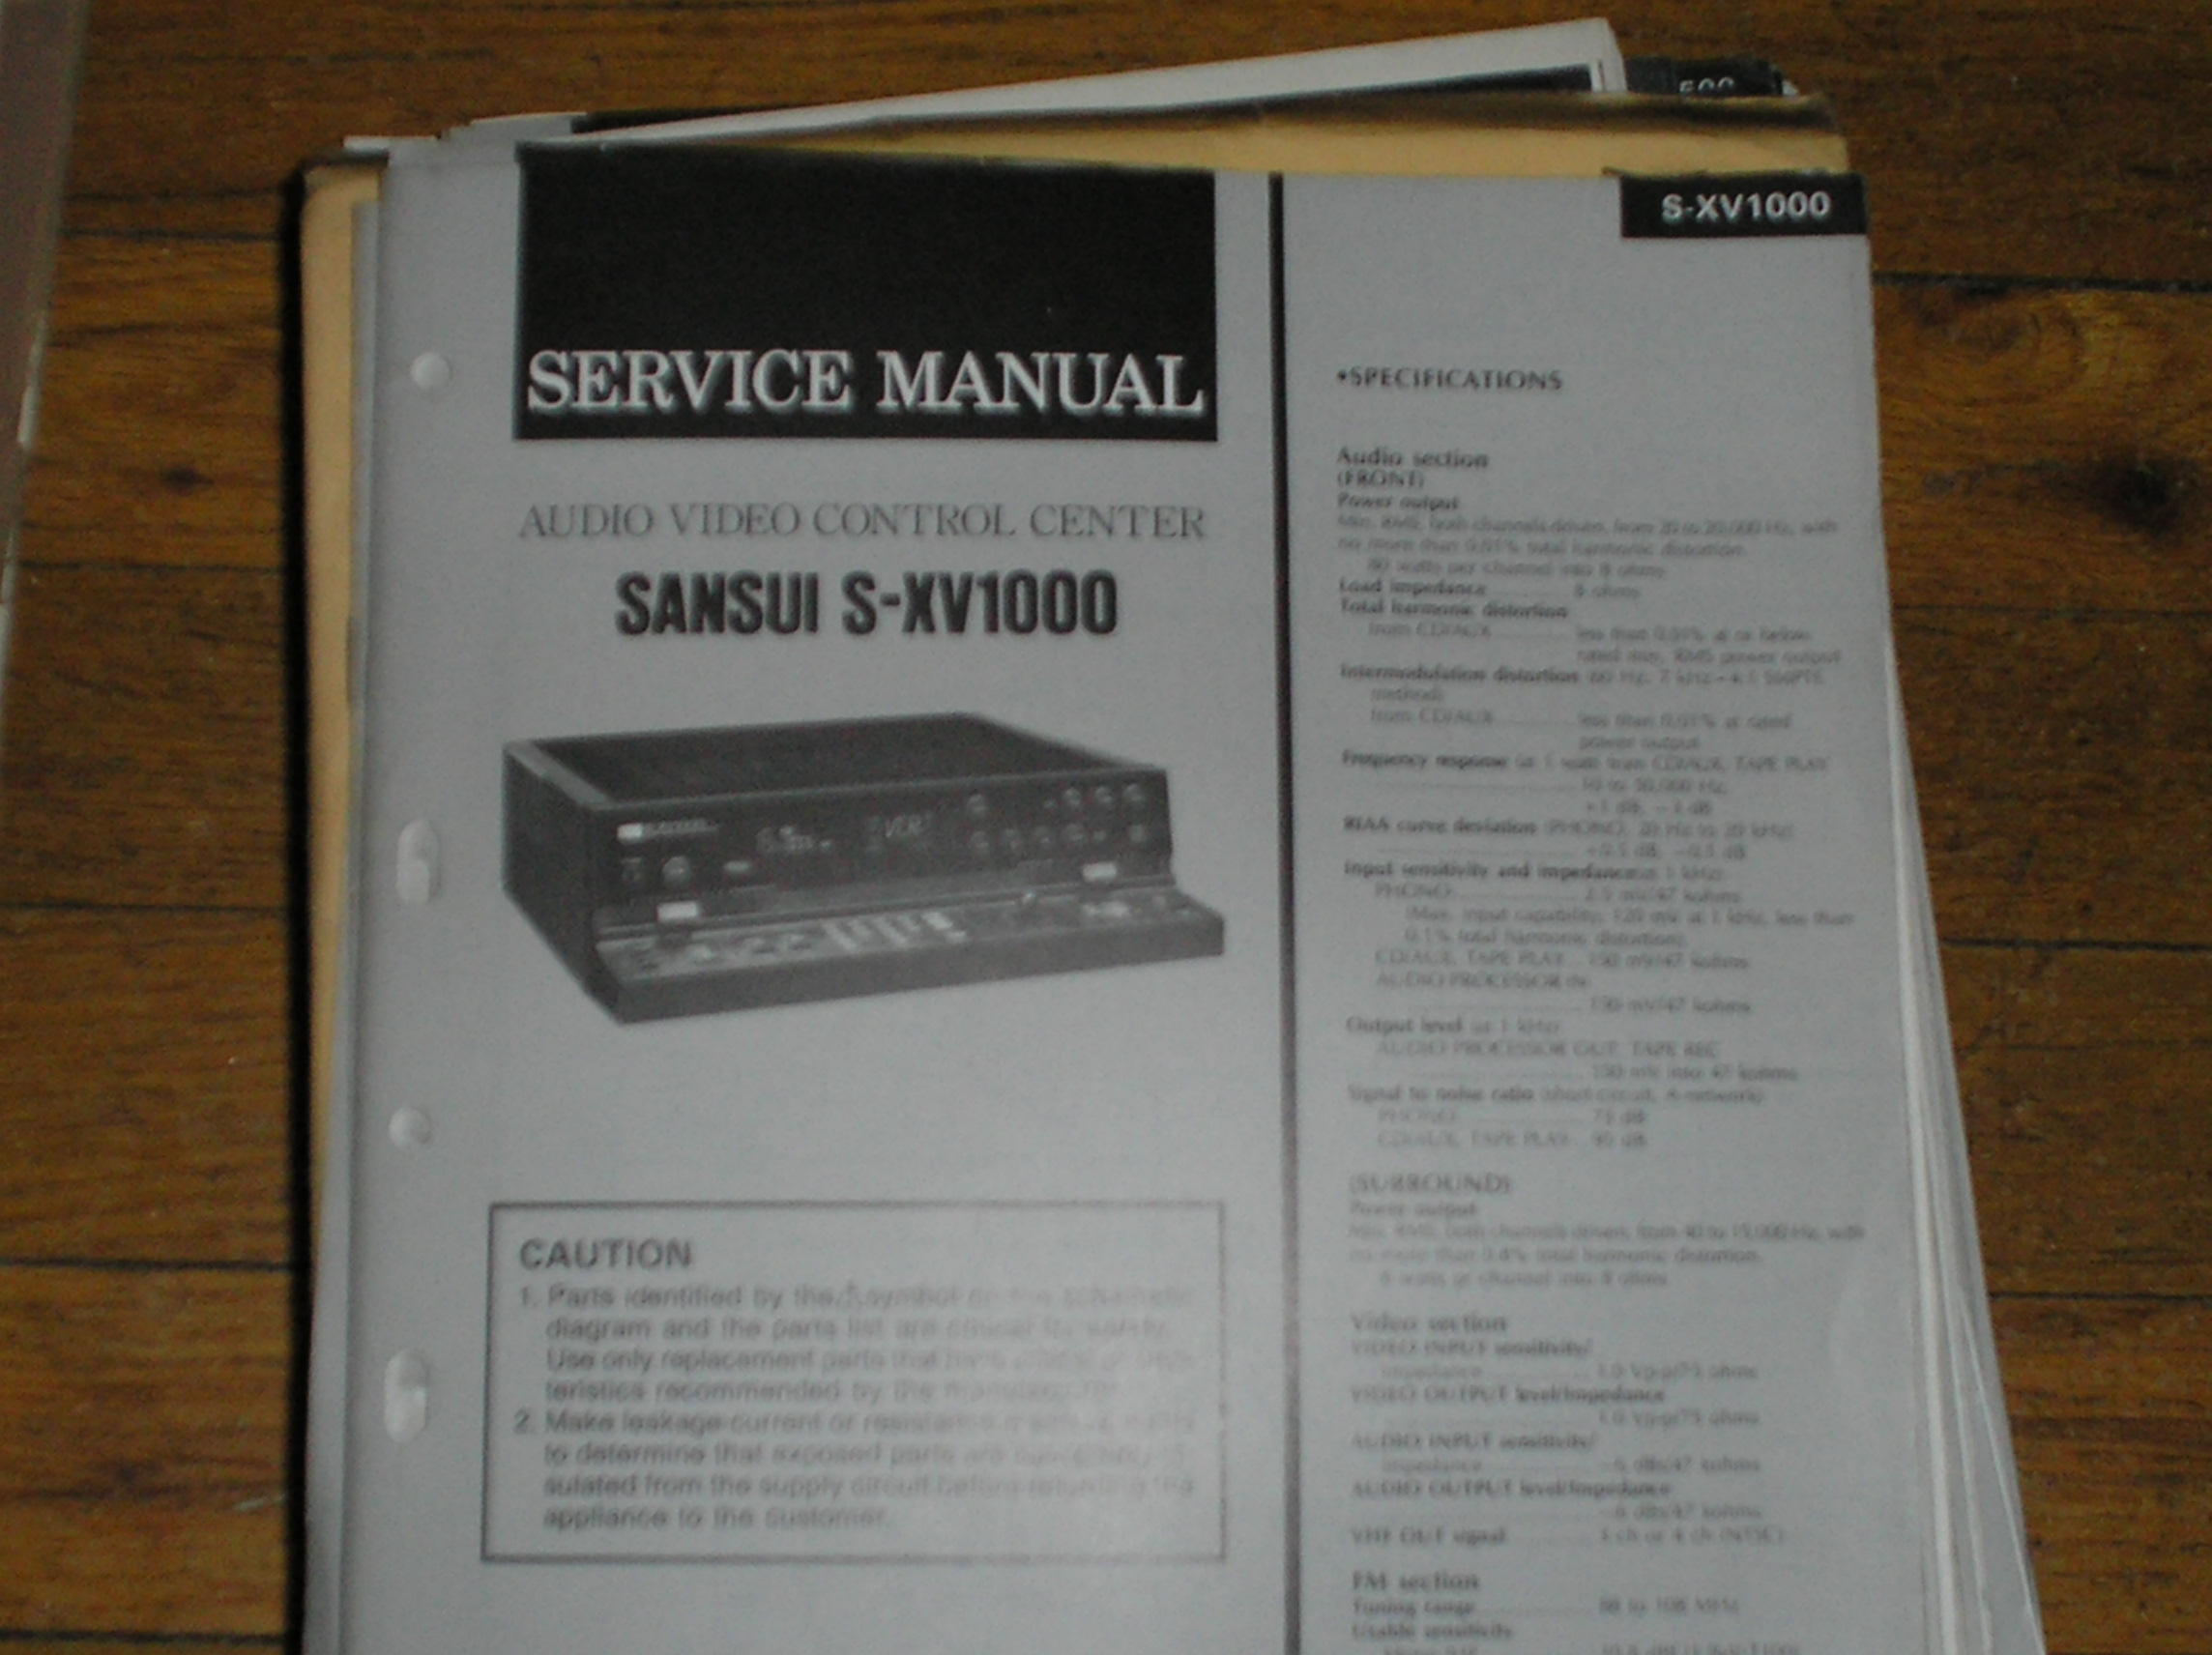 S-XV1000 Audio Video Controller Service Manual